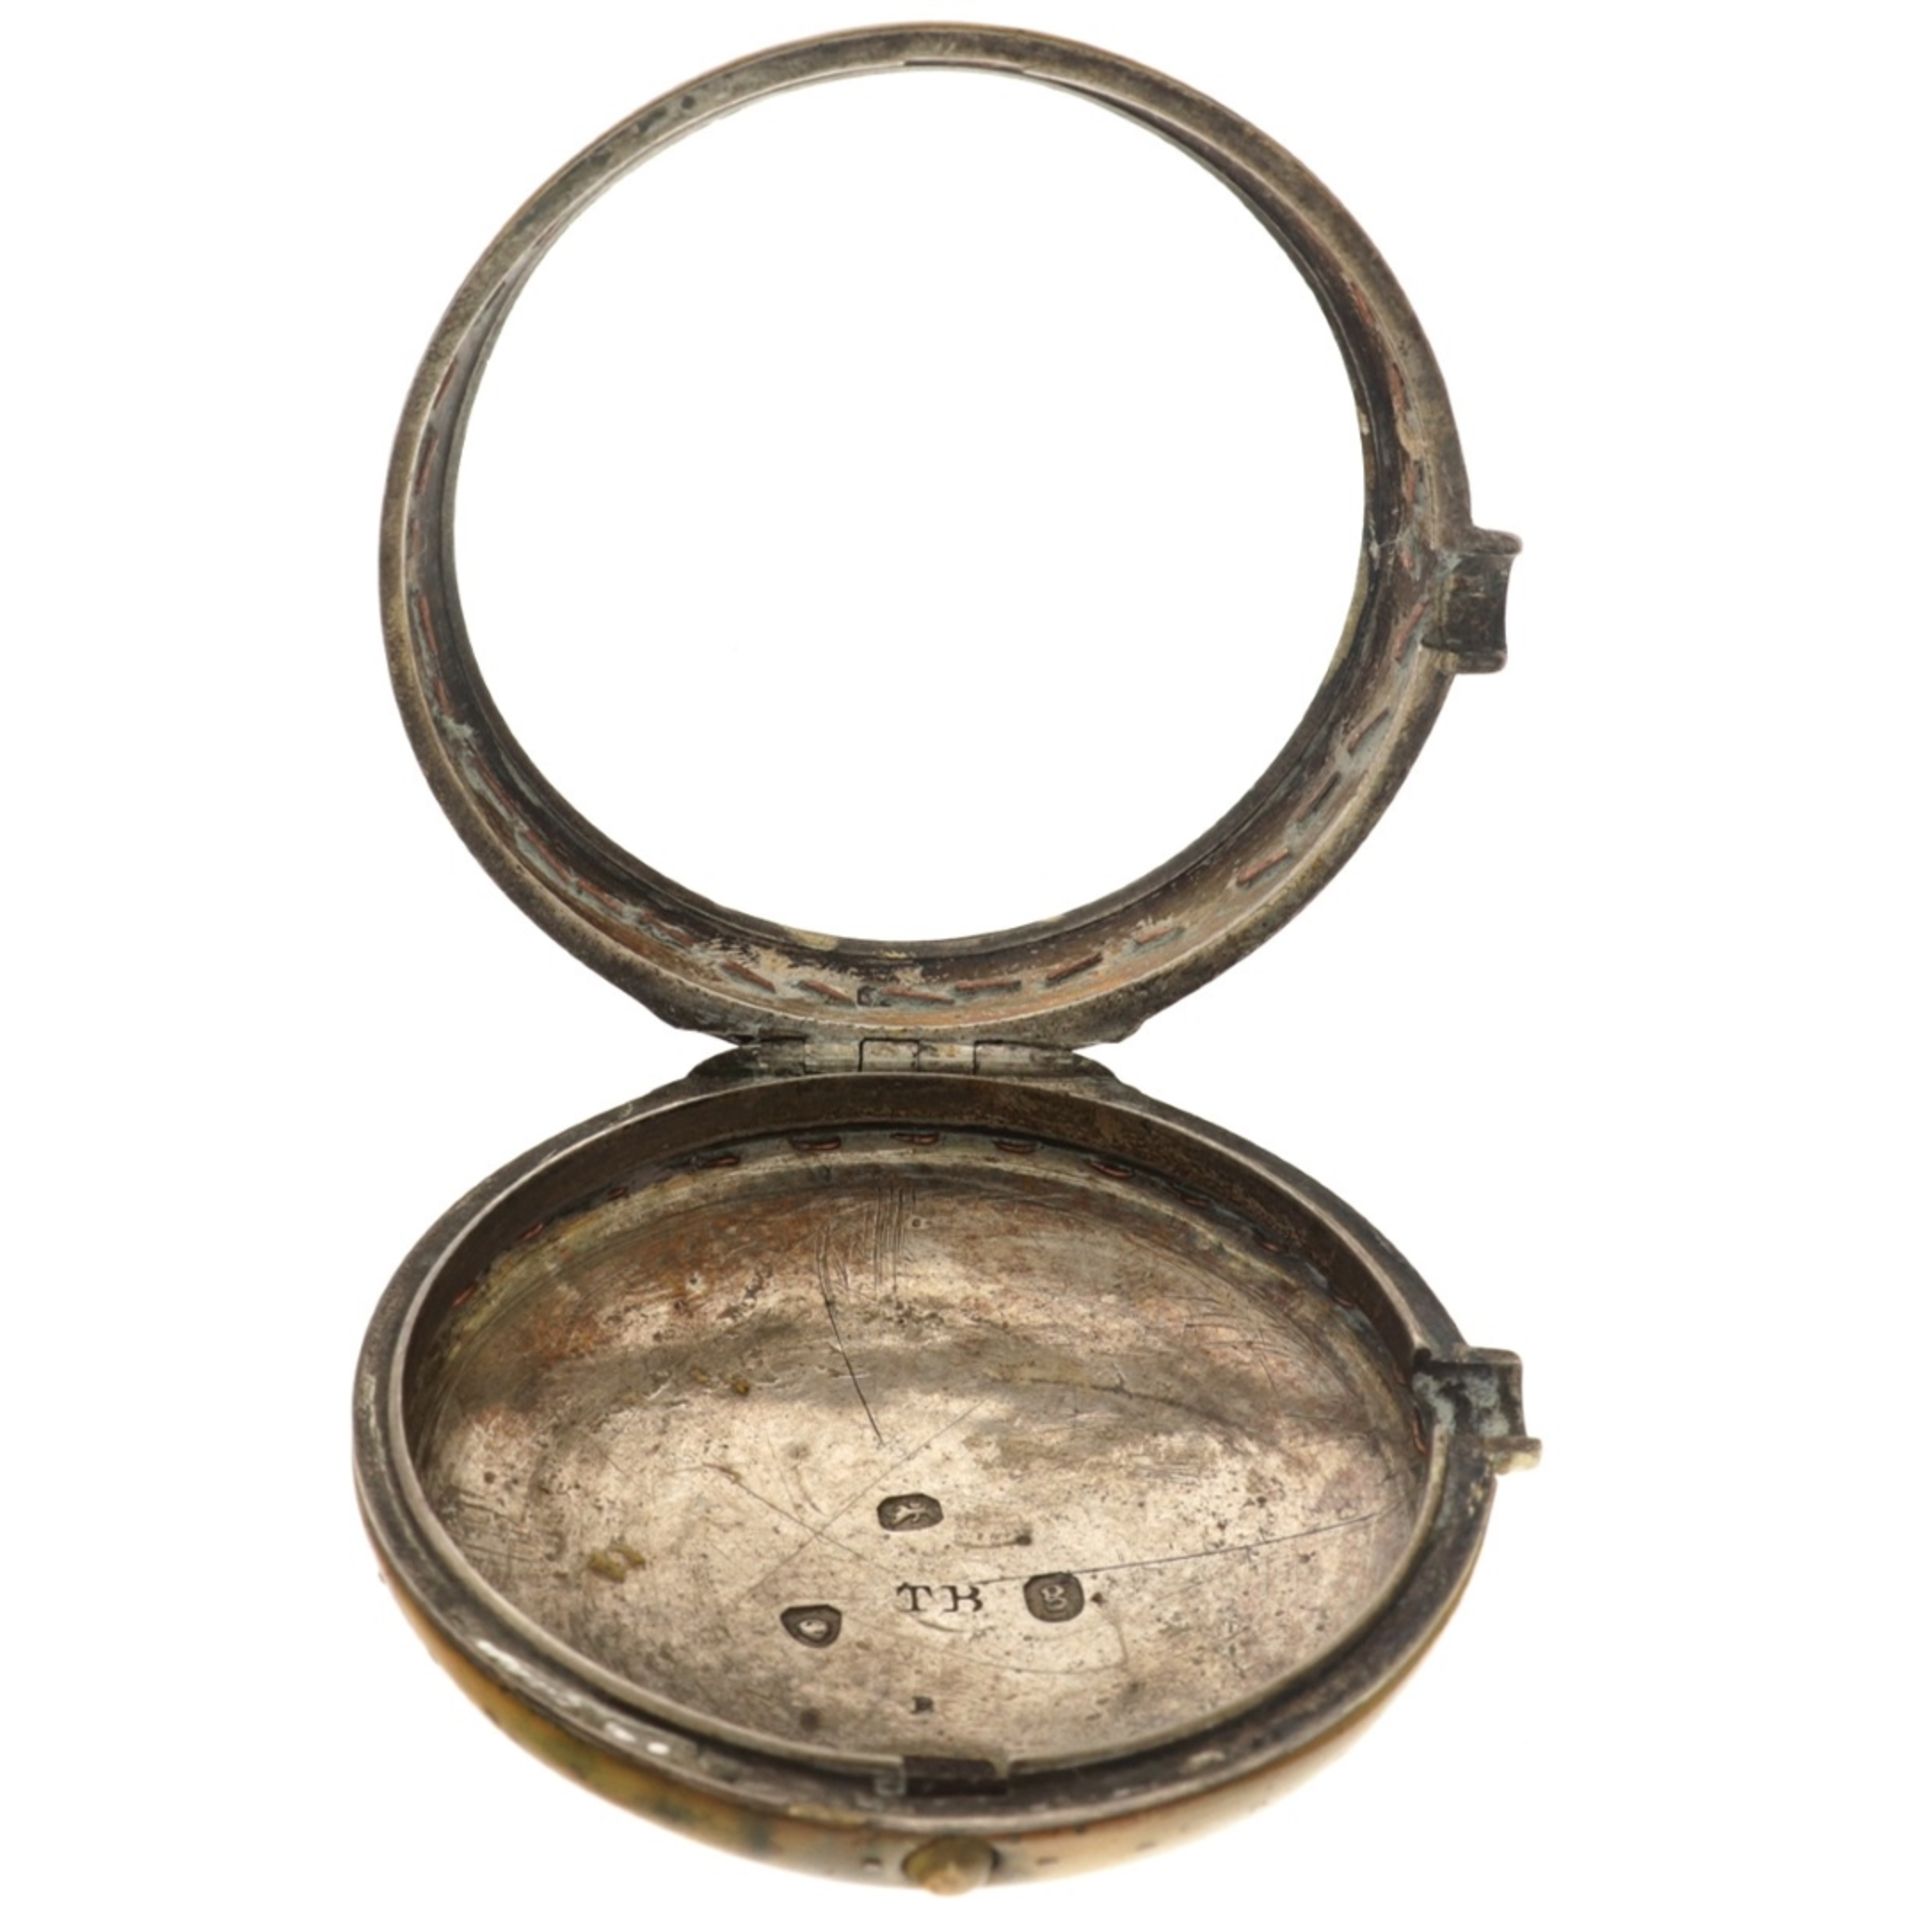 No Reserve - 'Huntercase' Silver (925/1000) - pocket watch case - approx. 1822, London.